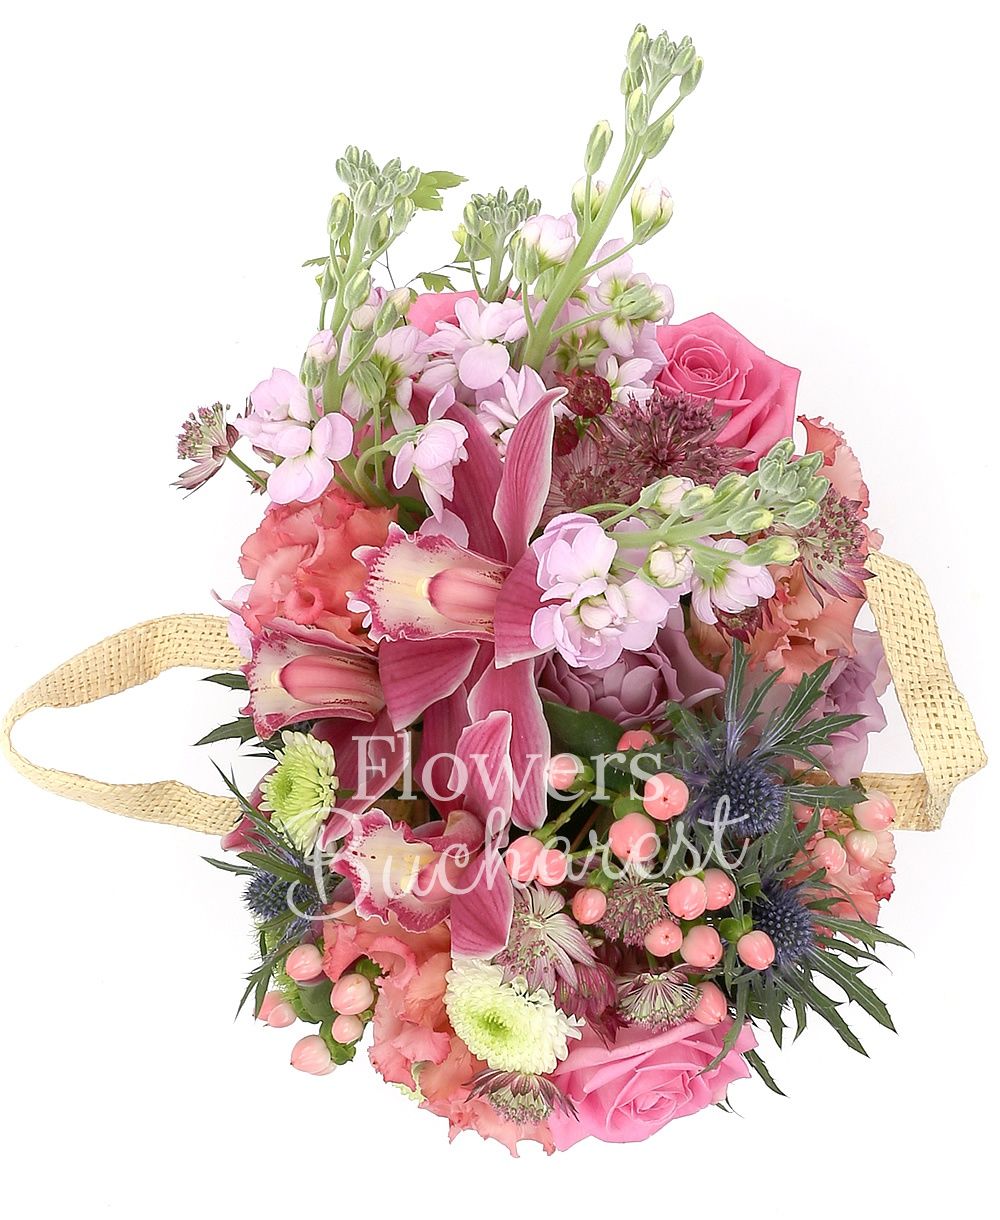 3 pink roses, 2 mauve roses, 1 eryngium, 1 white santini, 3 mauve matthiola, pink cymbidium, 3 pink hypericum, 2 pink astilbe, 3 pink lisianthus, 2 green carnations